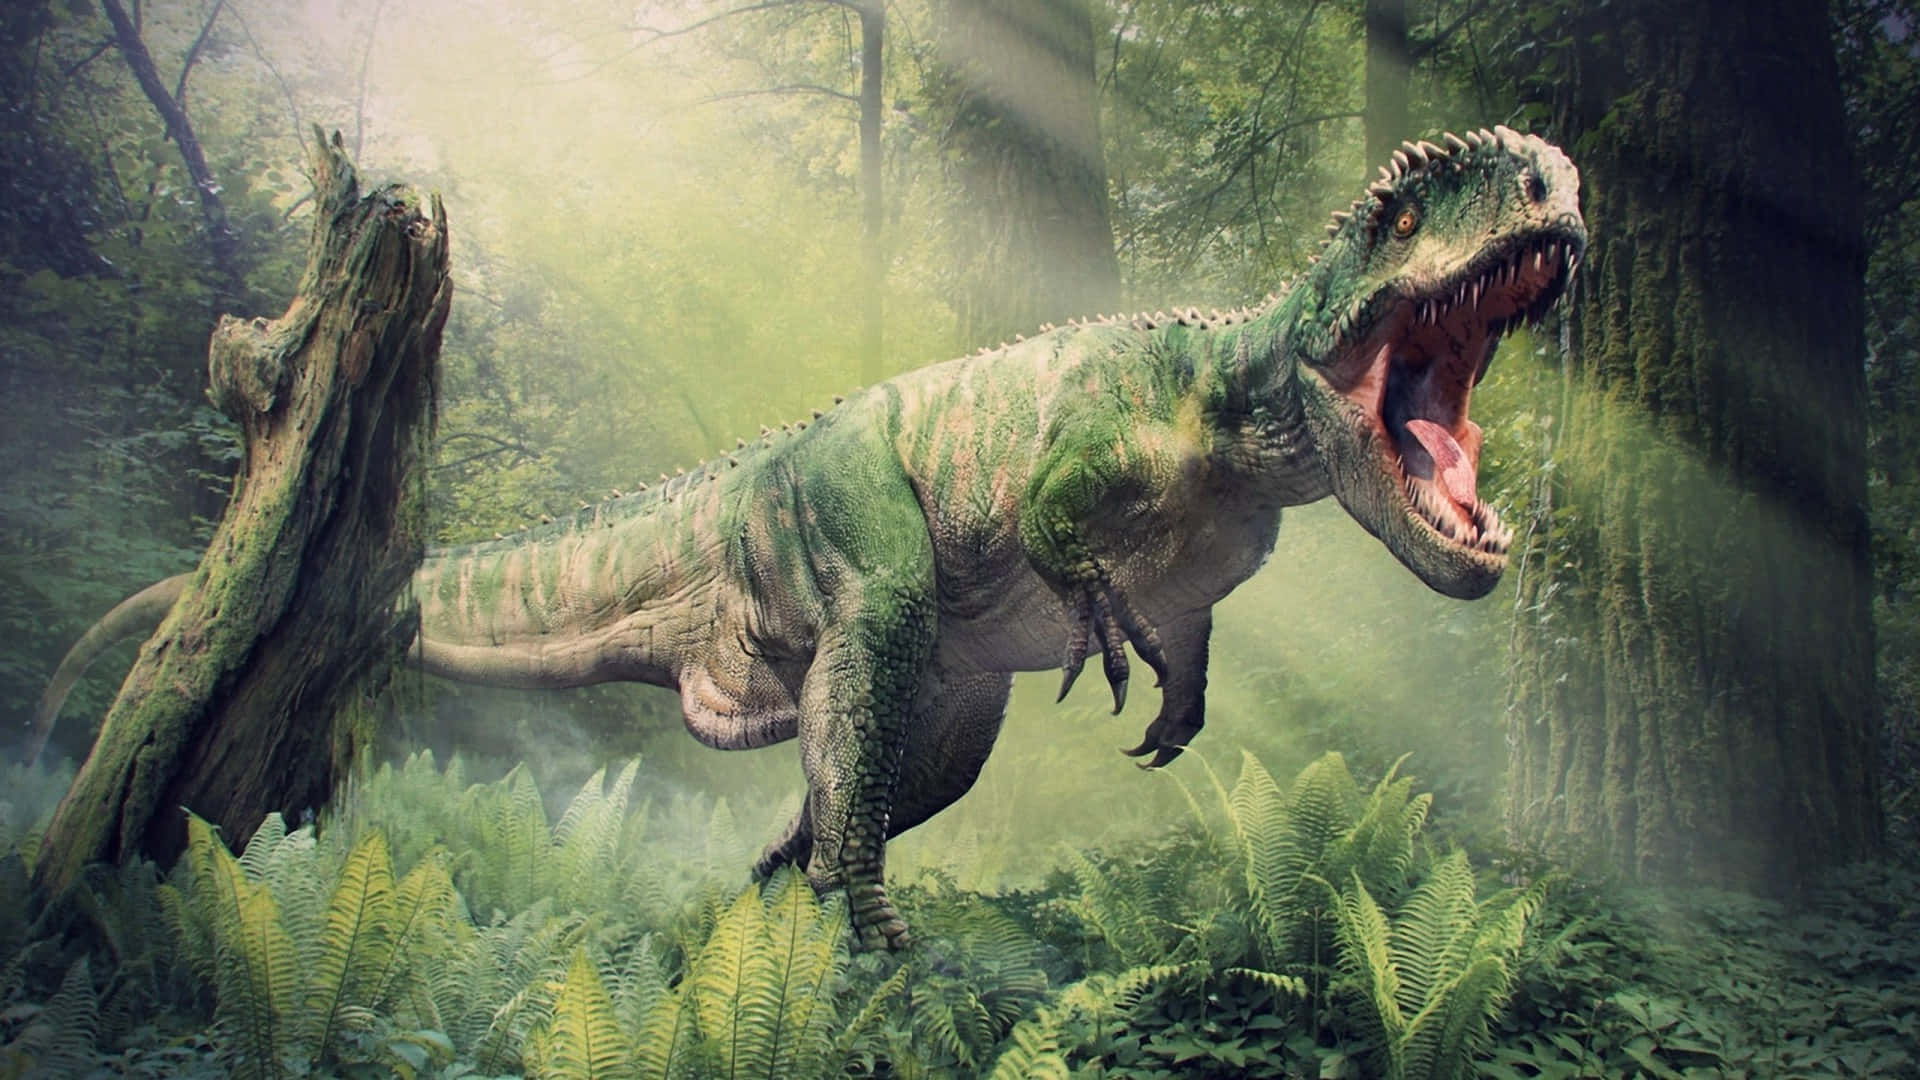 Explore a Magical Landscape with a Realistic Dinosaur Wallpaper